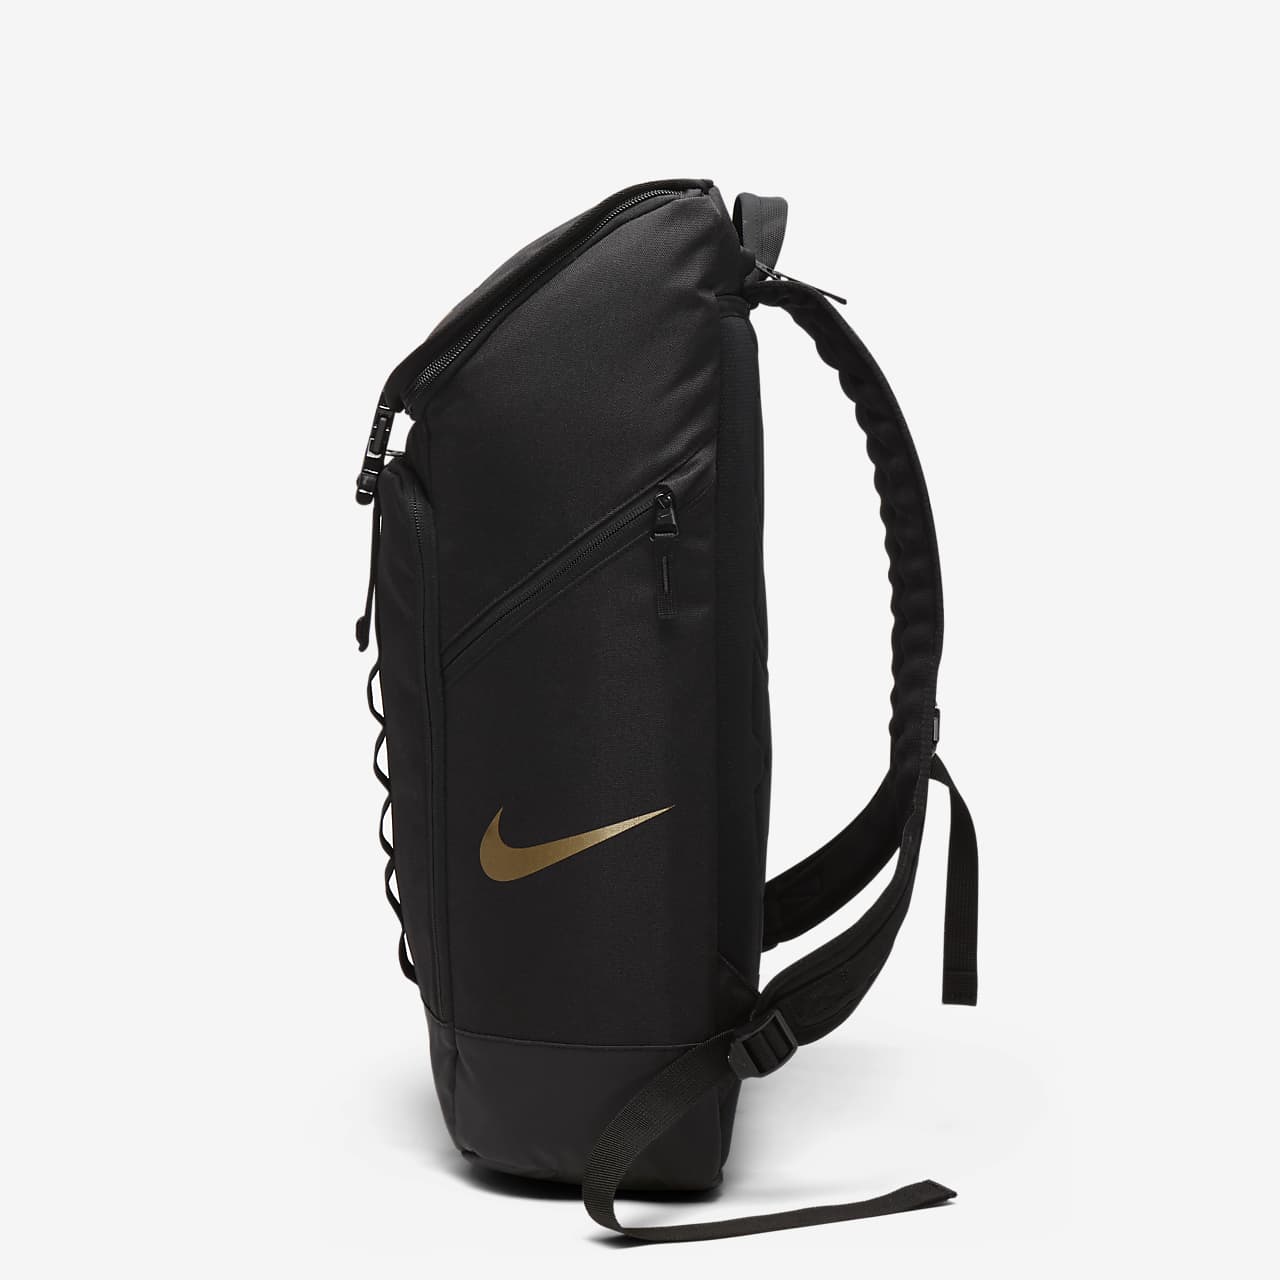 lebron backpack sale